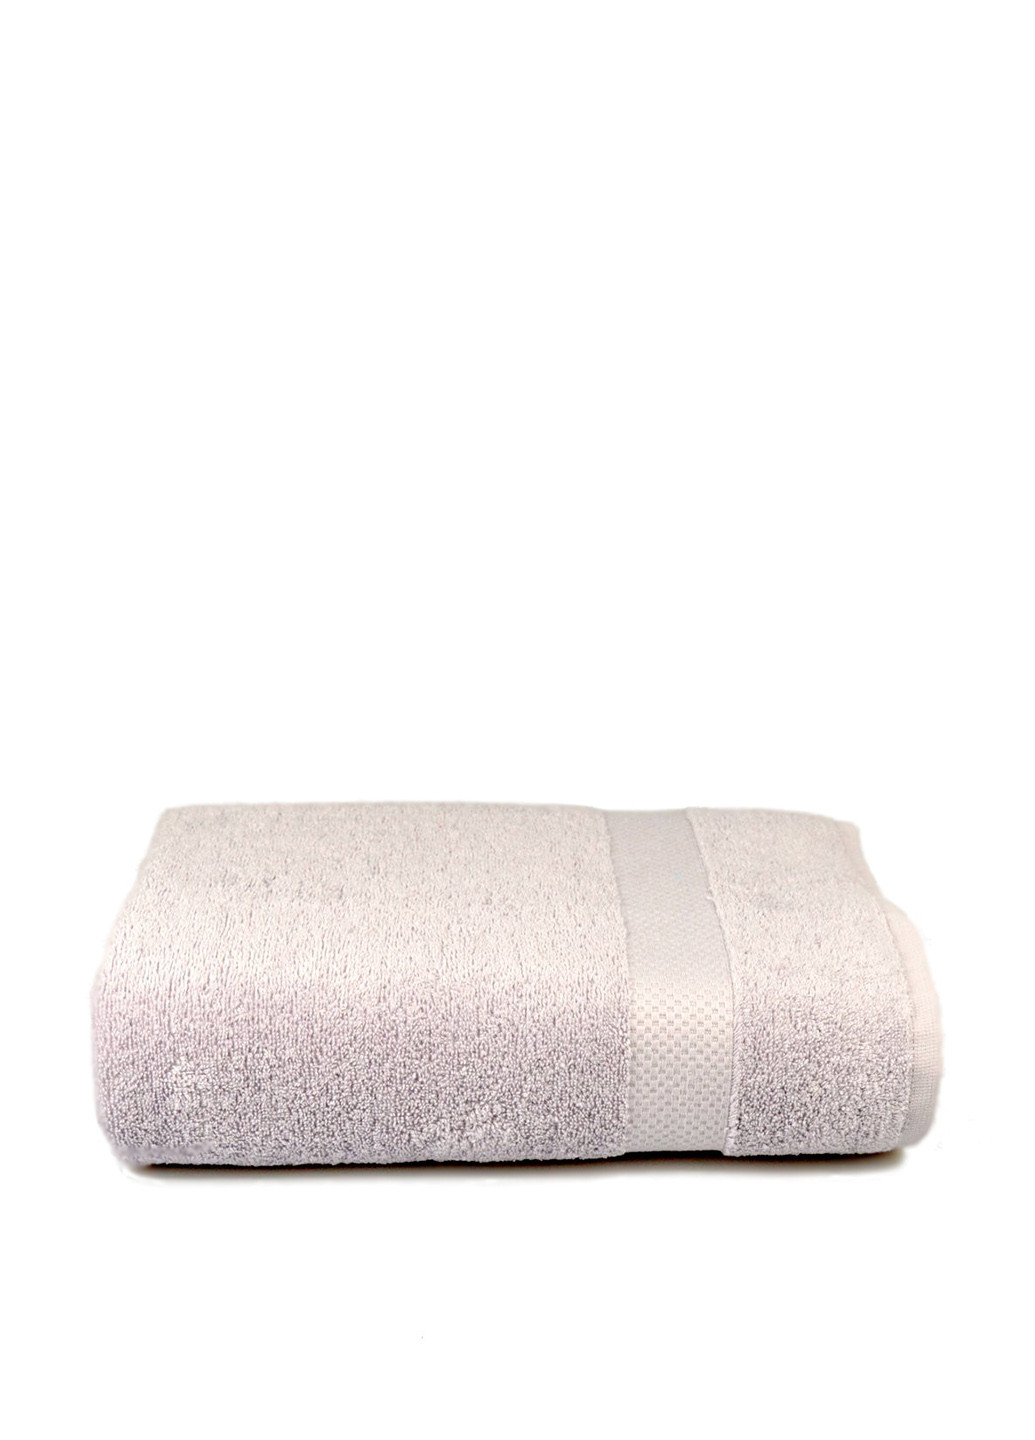 No Brand полотенце, 70х140 см однотонный серый производство - Азербайджан